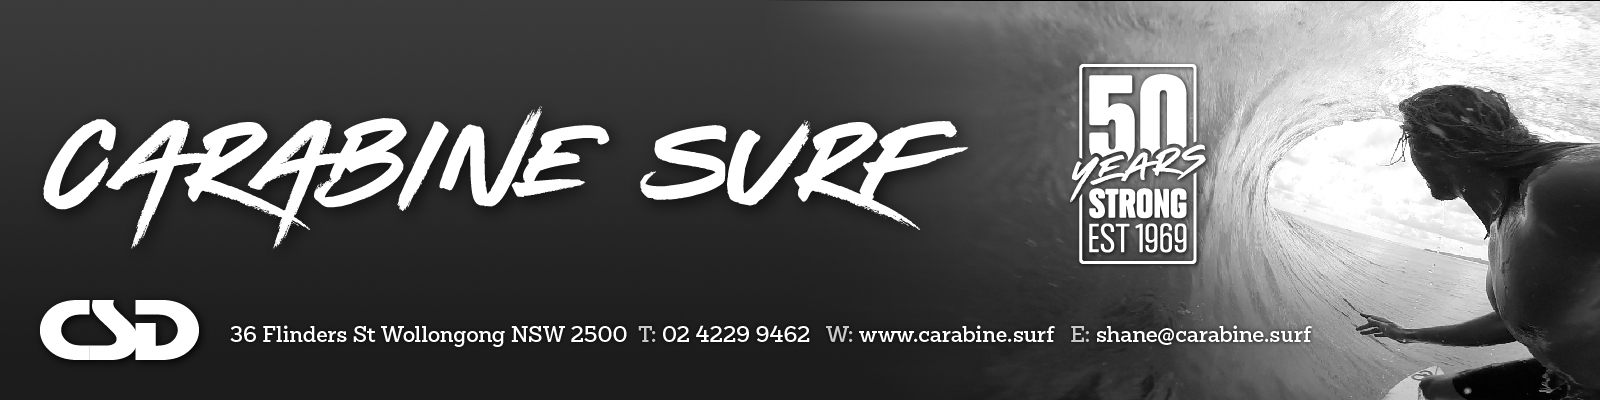 Carabine Surf Web Banner